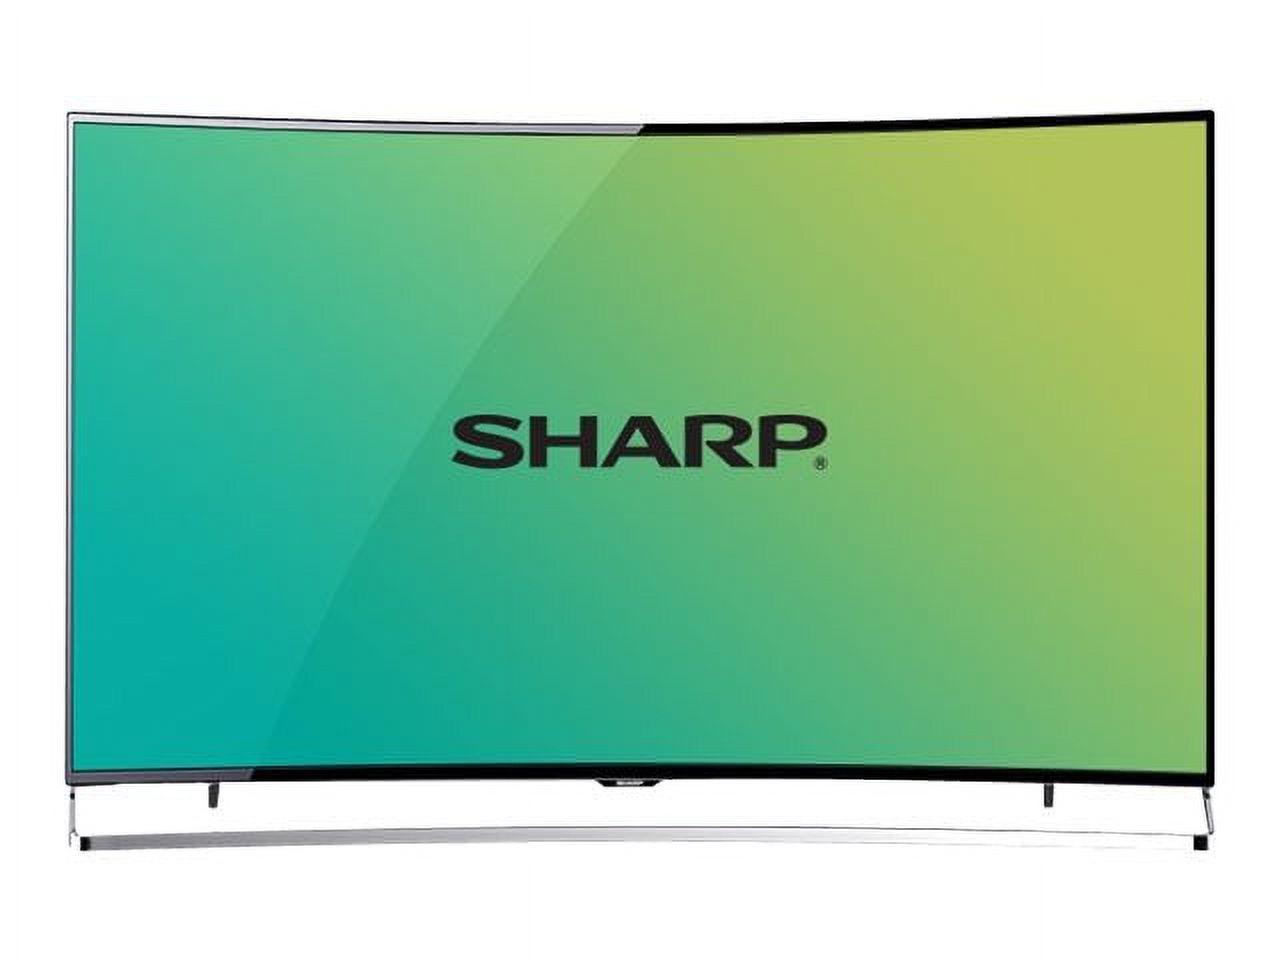 Sharp LC-65N9000U - 65" Diagonal Class (64.5" viewable) - Aquos - curved 3D LED-backlit LCD TV - Smart TV - 4K UHD (2160p) 3840 x 2160 - HDR - Quantum Dot - image 1 of 7